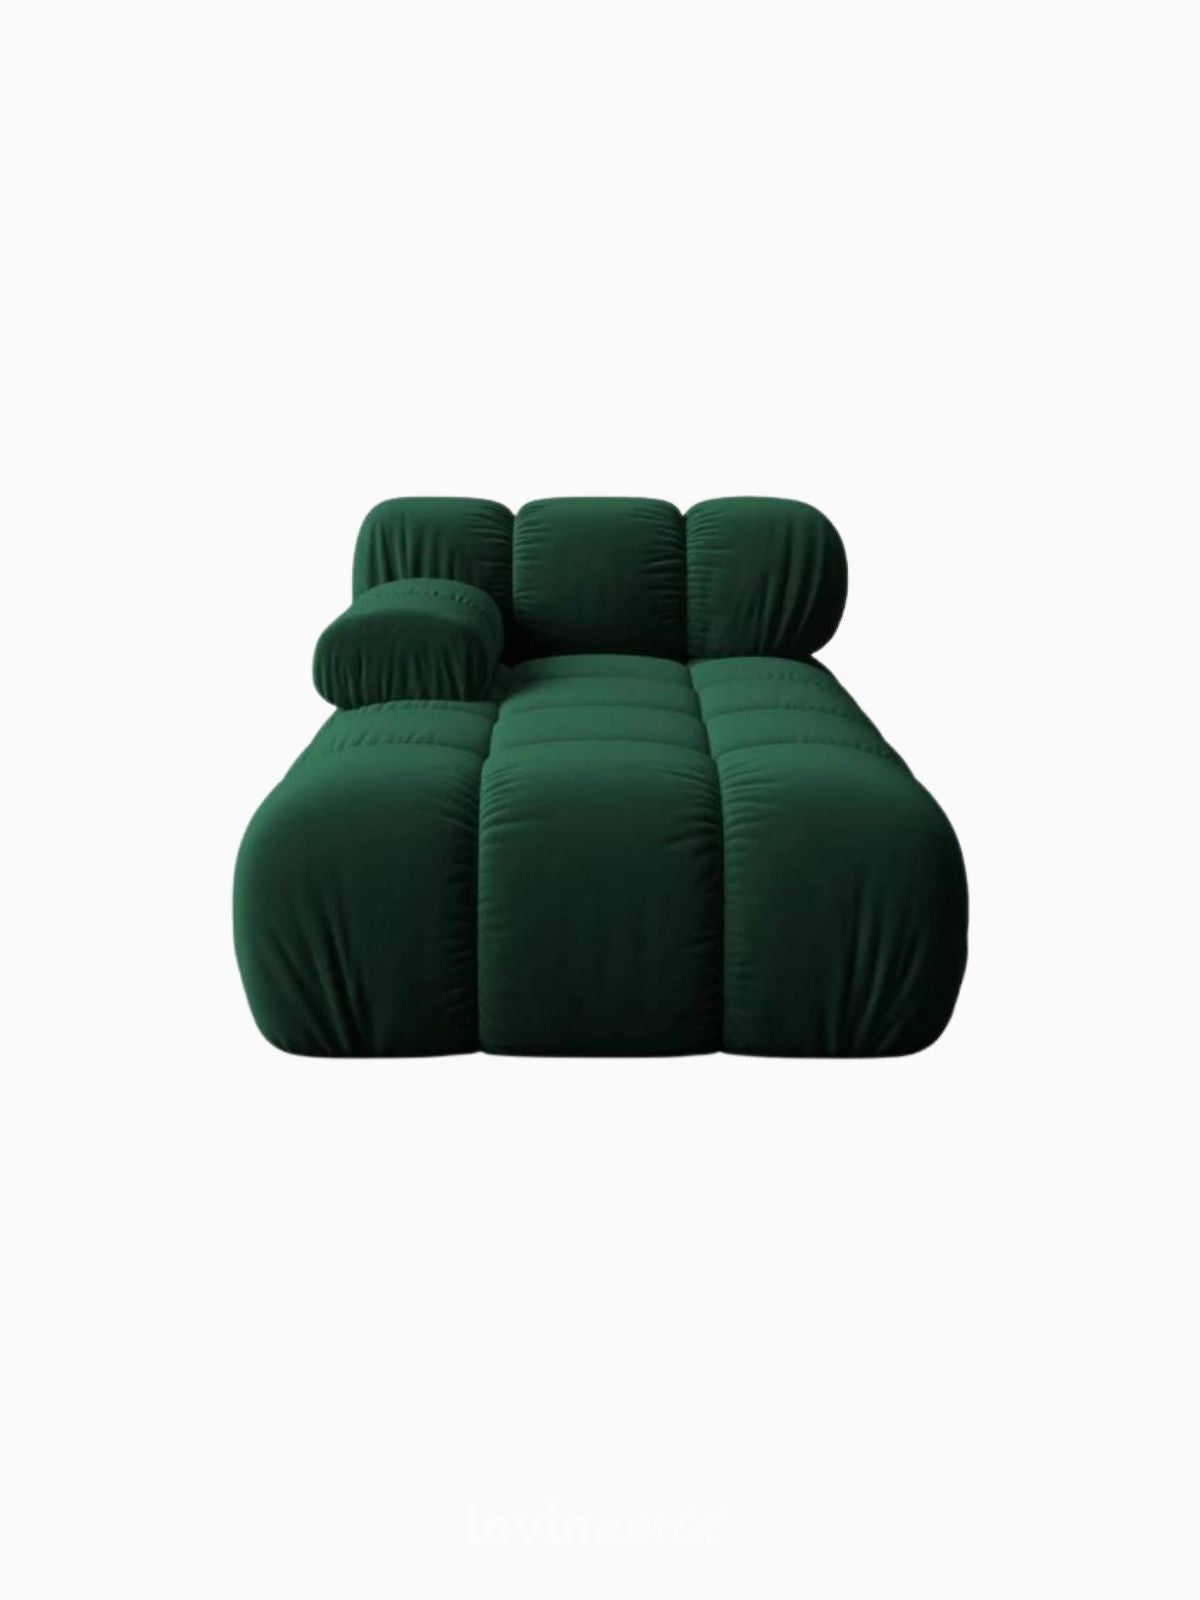 Divano modulare sinistro Bellis in velluto, colore verde-1